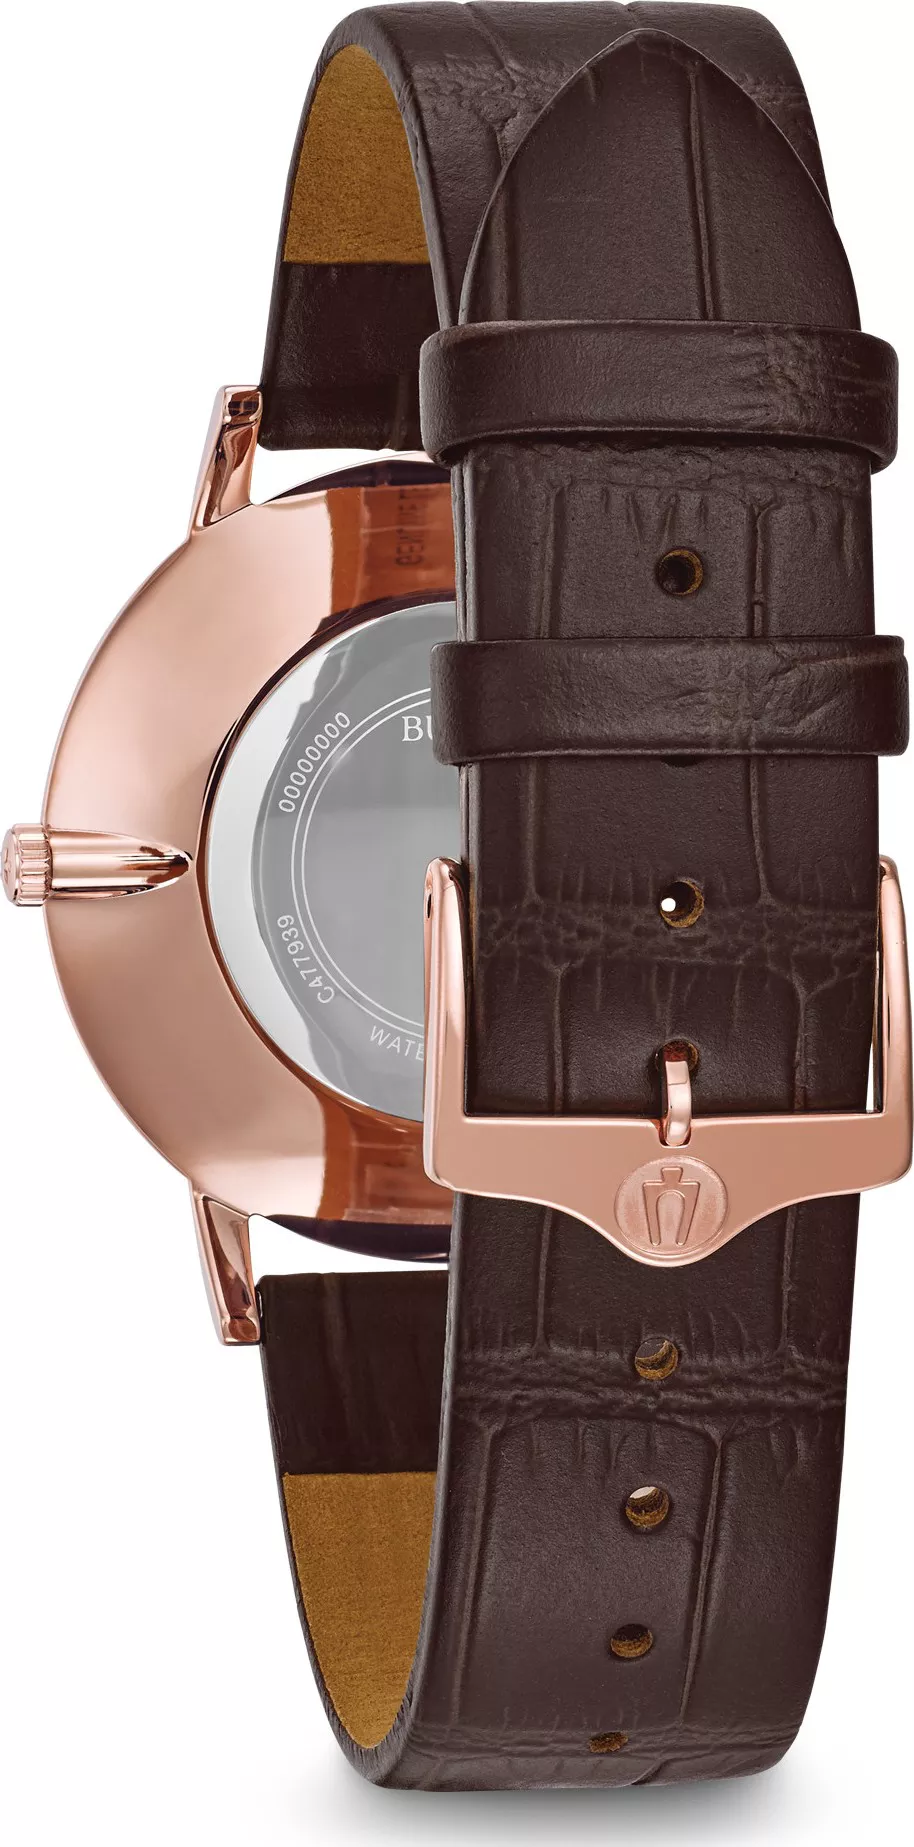 Bulova Classic Leather Watch 40mm